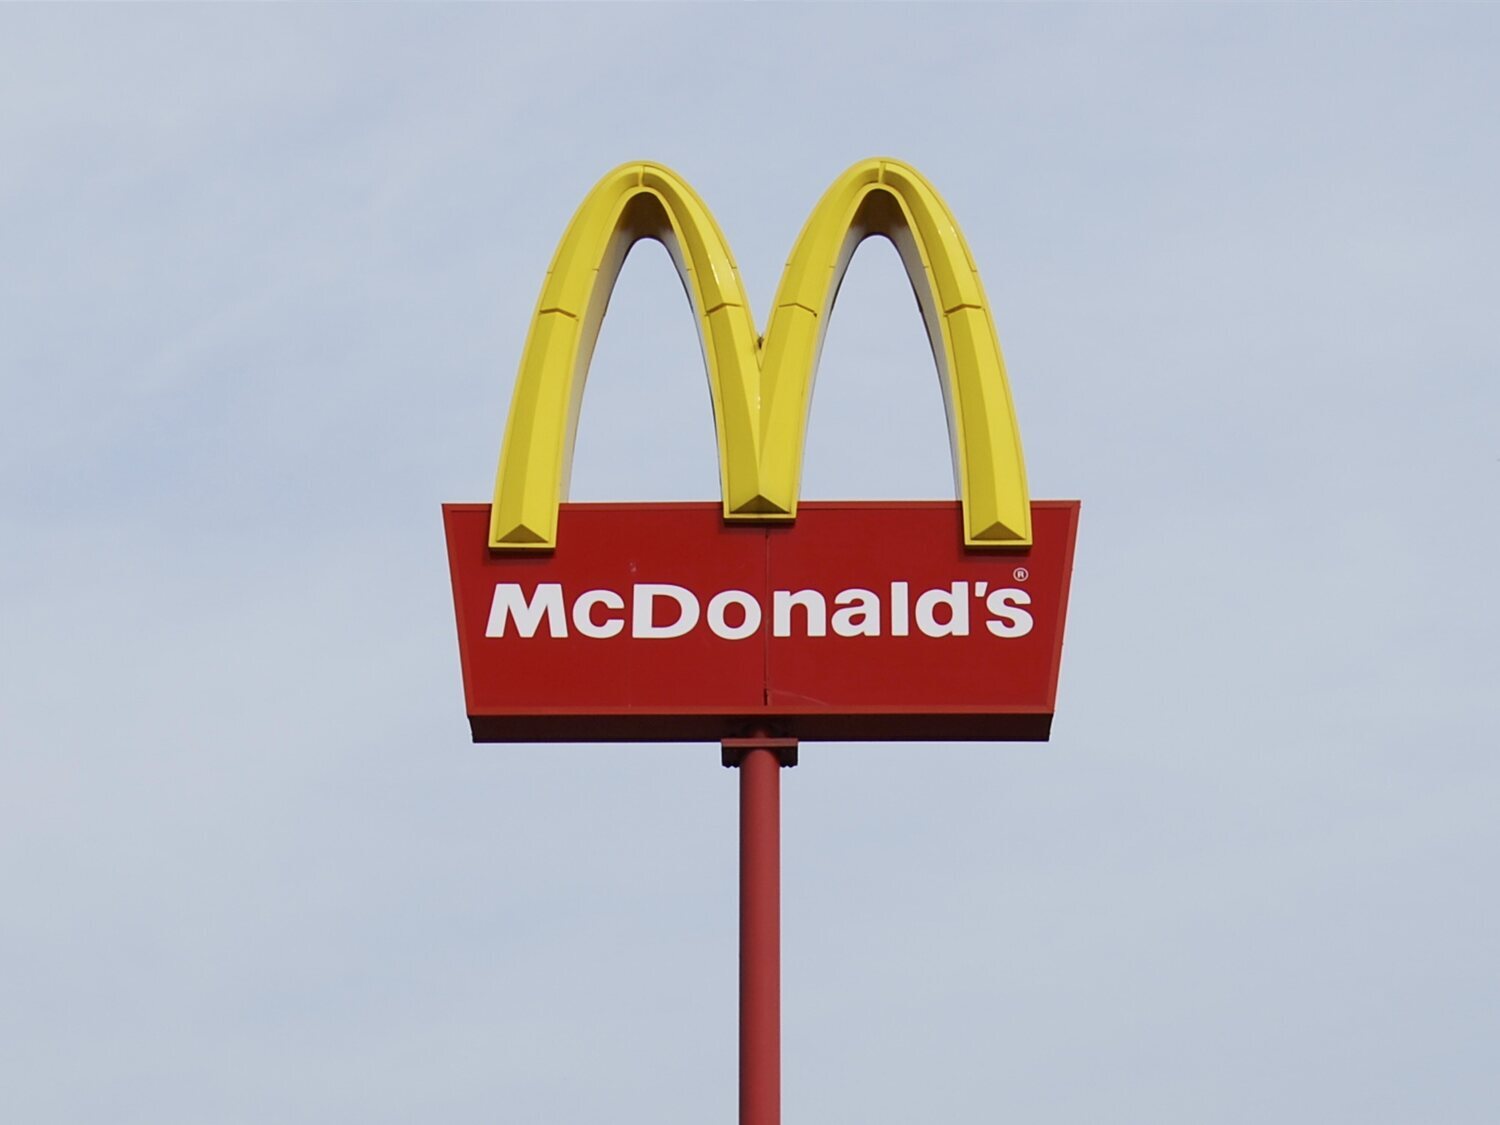 Un empleado de McDonald's desvela el truco secreto para que te sirvan la mejor hamburguesa posible